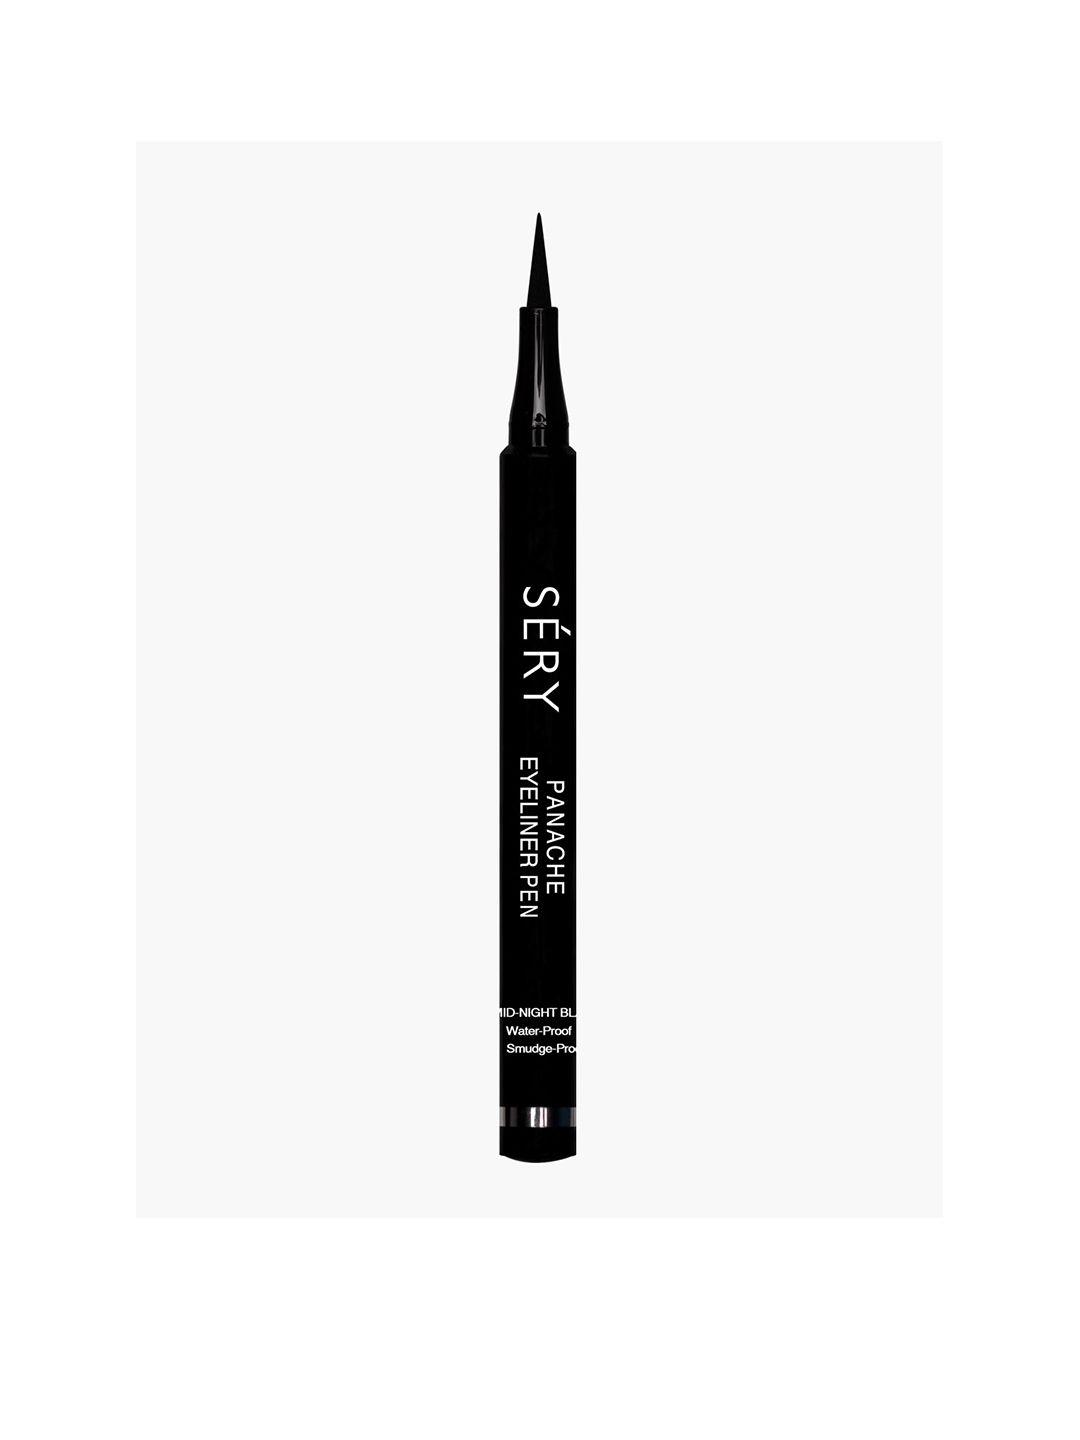 sery water proof & smudge proof panache eye liner pen - mid-night black